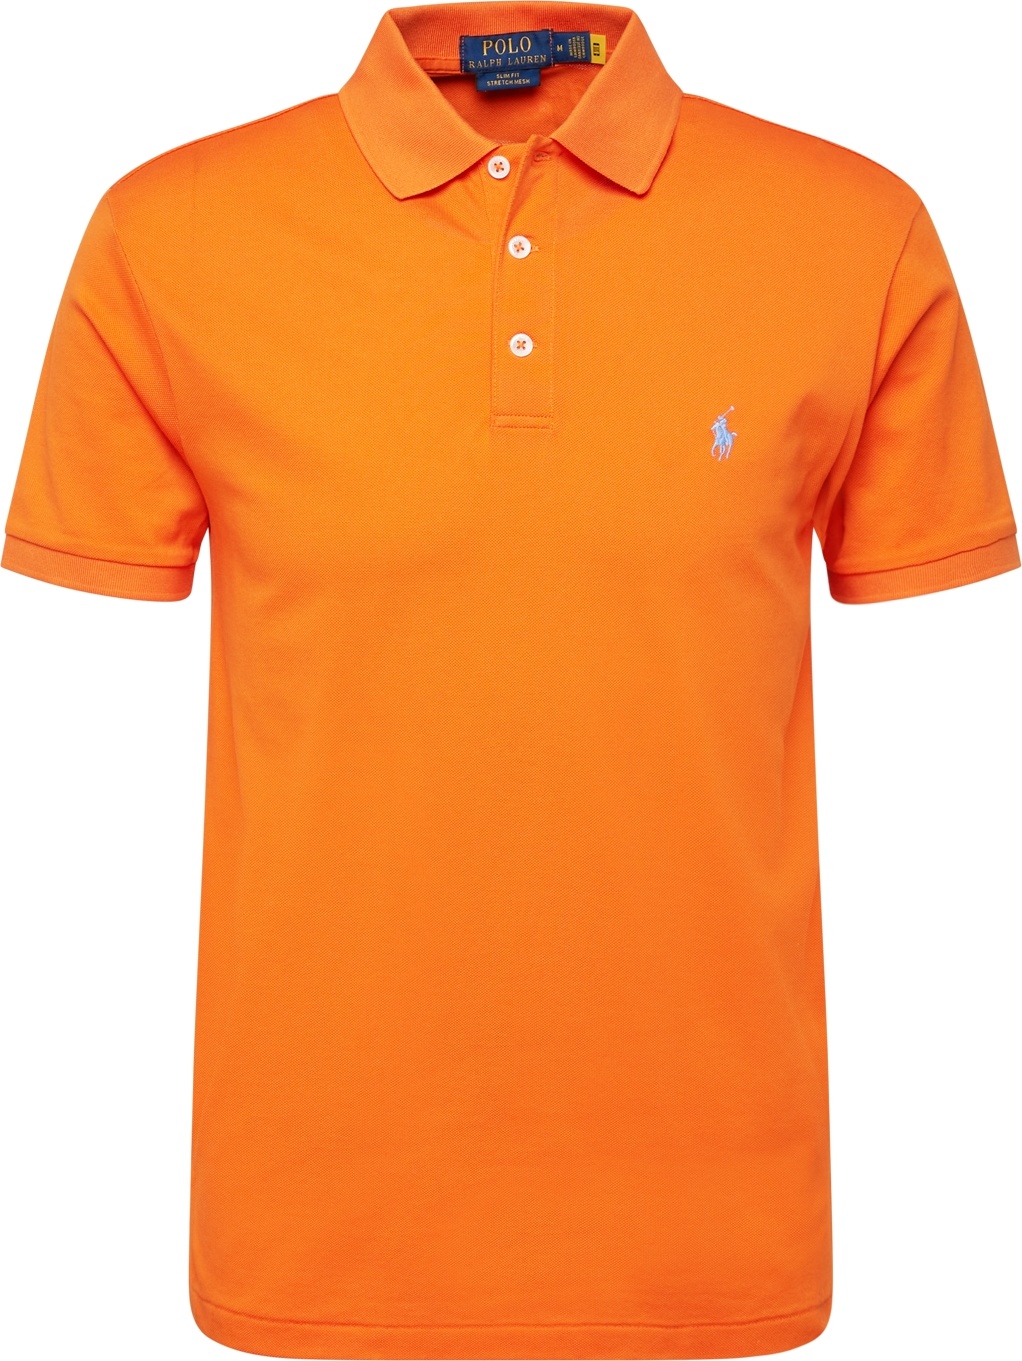 Tričko Polo Ralph Lauren světlemodrá / oranžová